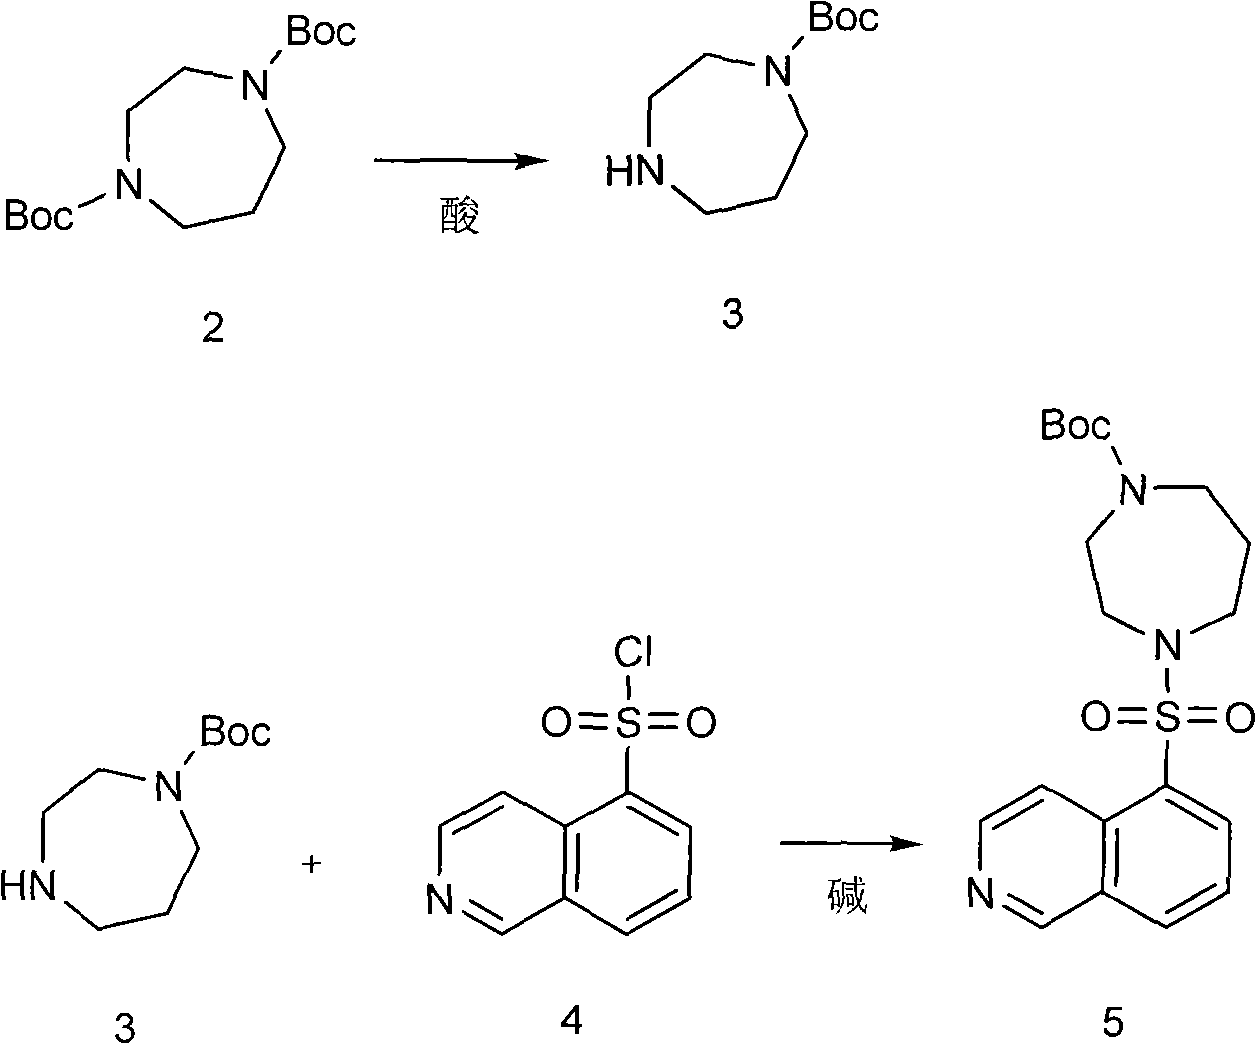 Production method of fasudil hydrochloride